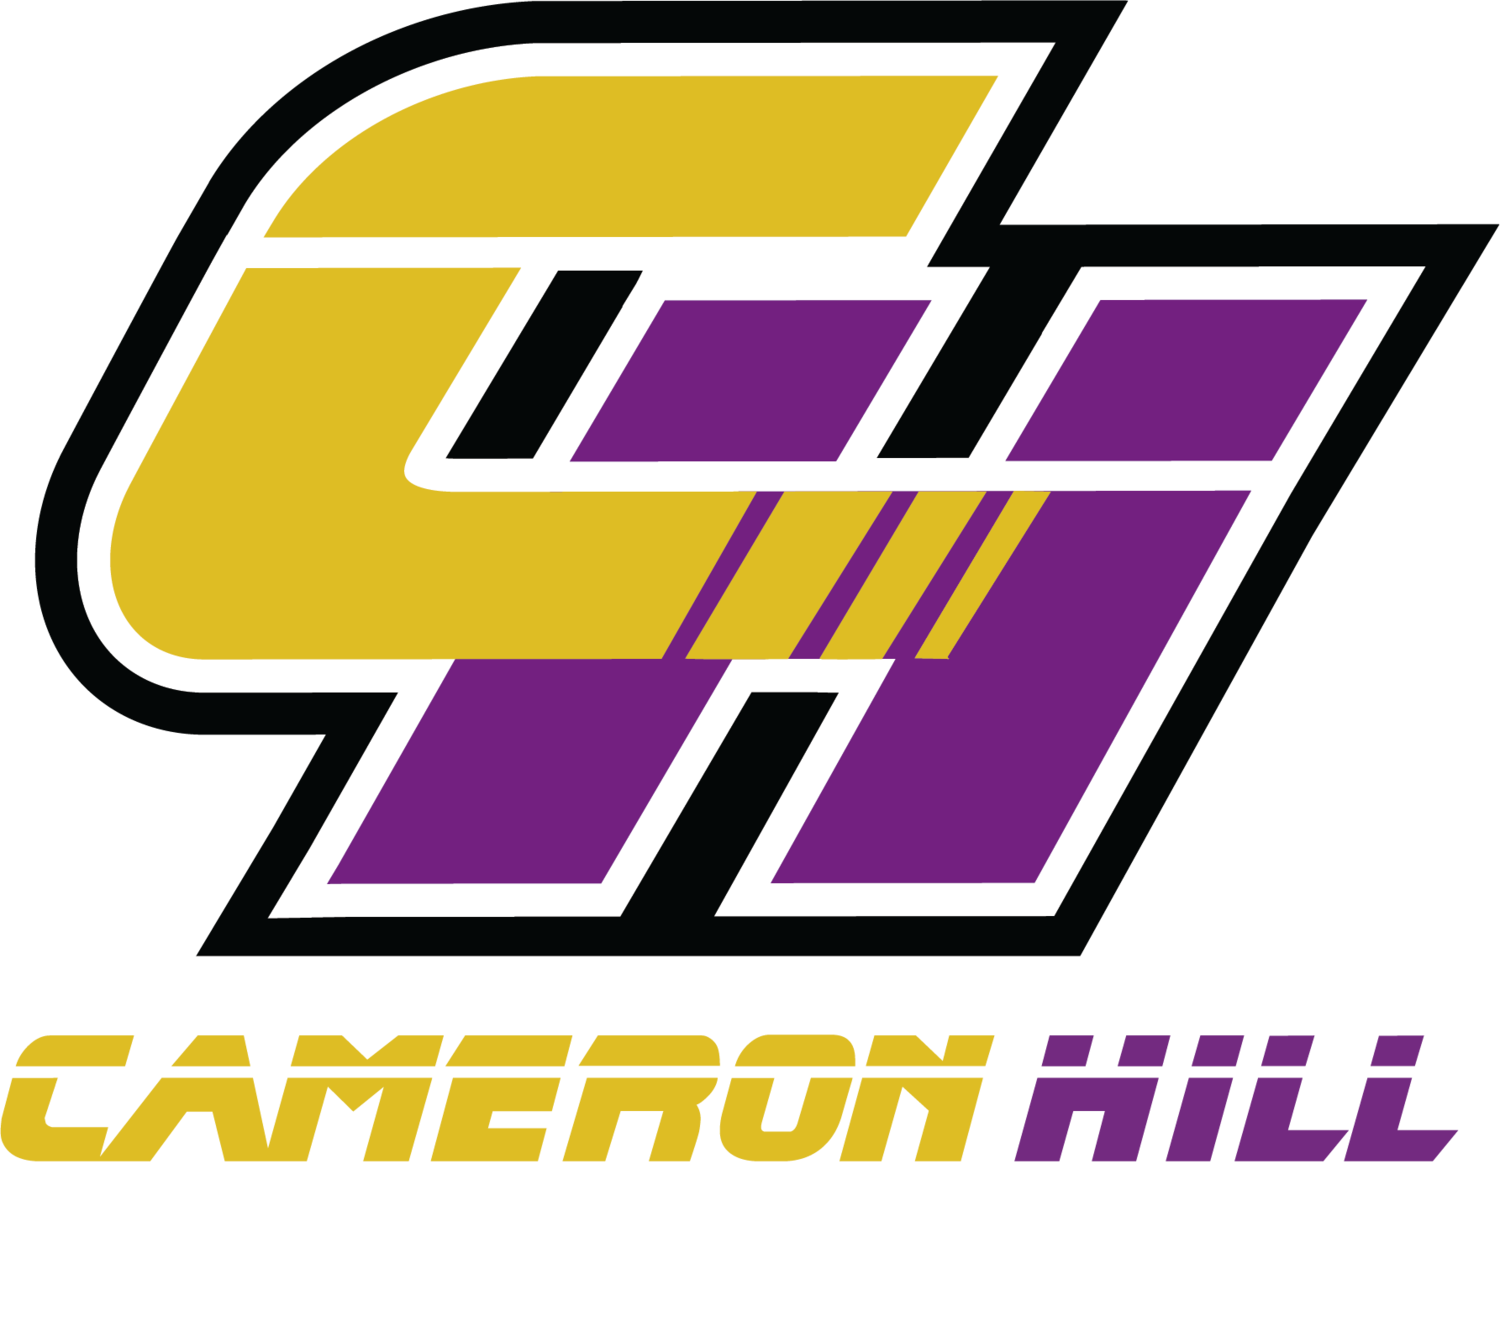 Cameron Hill Racing